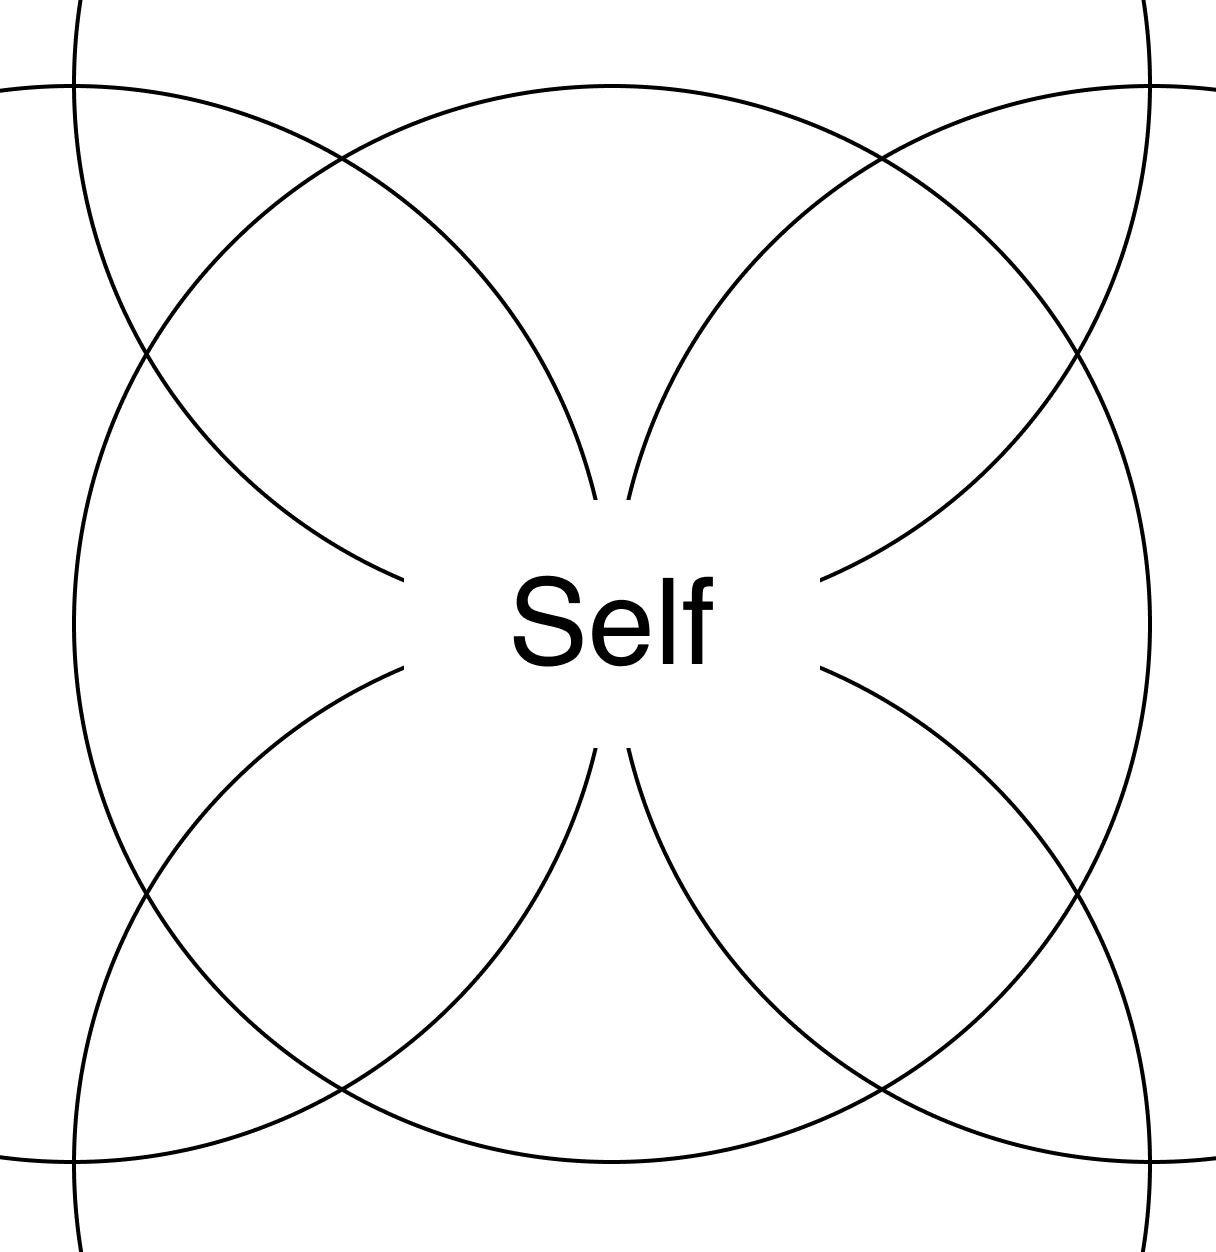 Zoomed in Mandala showing the Self Sphere